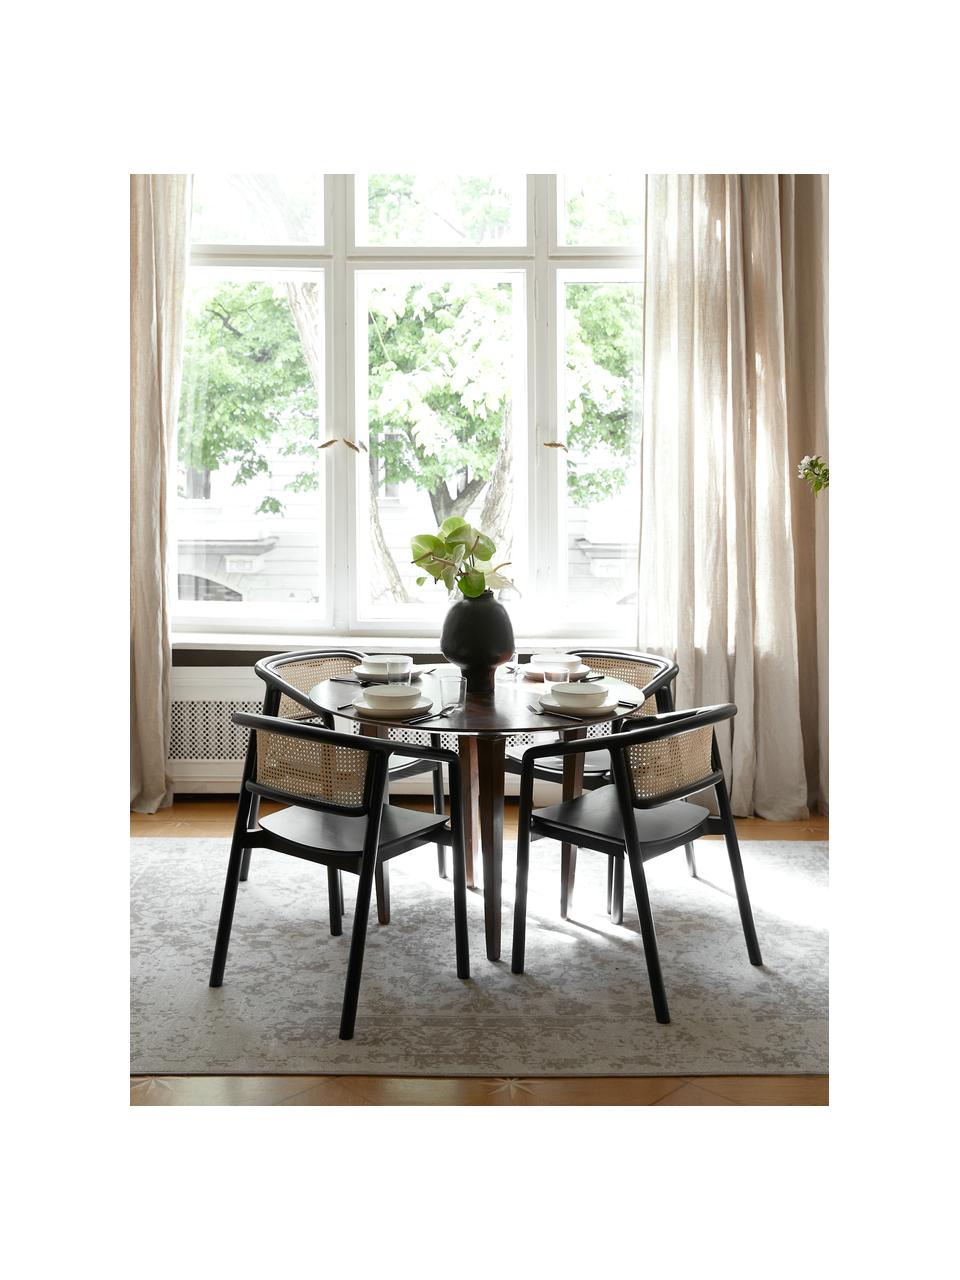 Židle s područkami a vídeňskou pleteninou Gali, Černá, béžová, Š 56 cm, H 55 cm